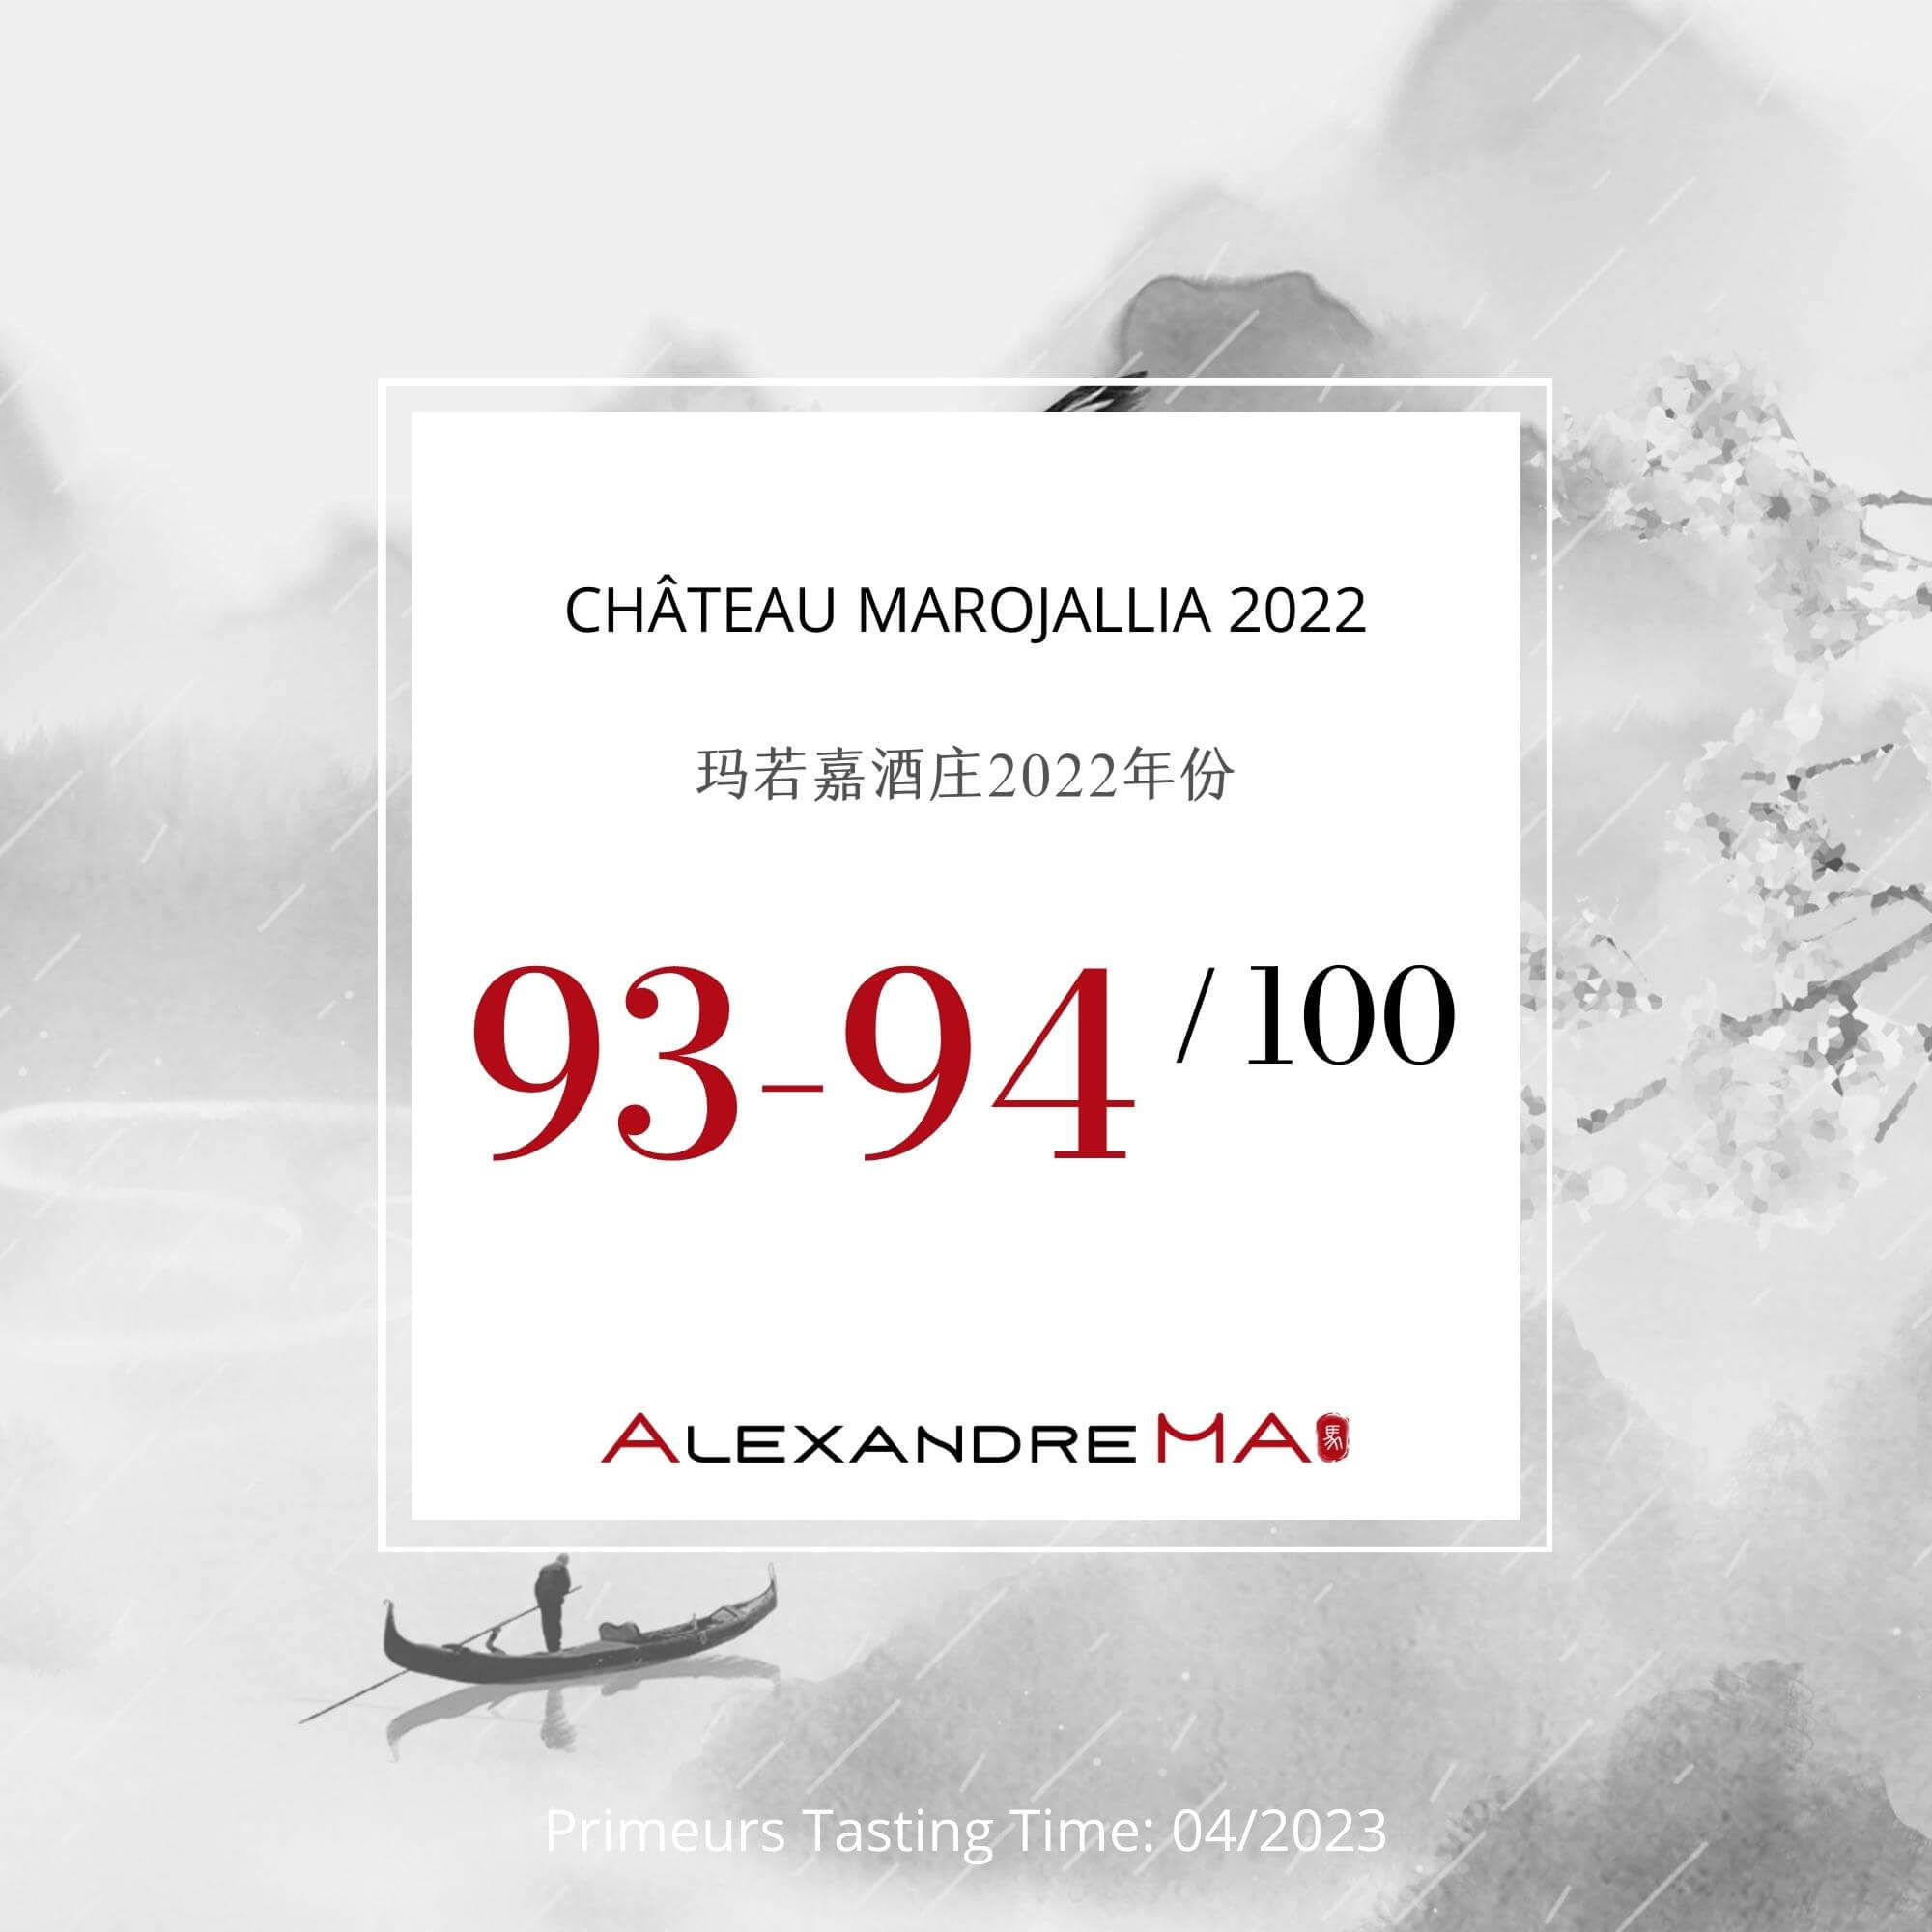 Château Marojallia 2022 Primeurs - Alexandre MA